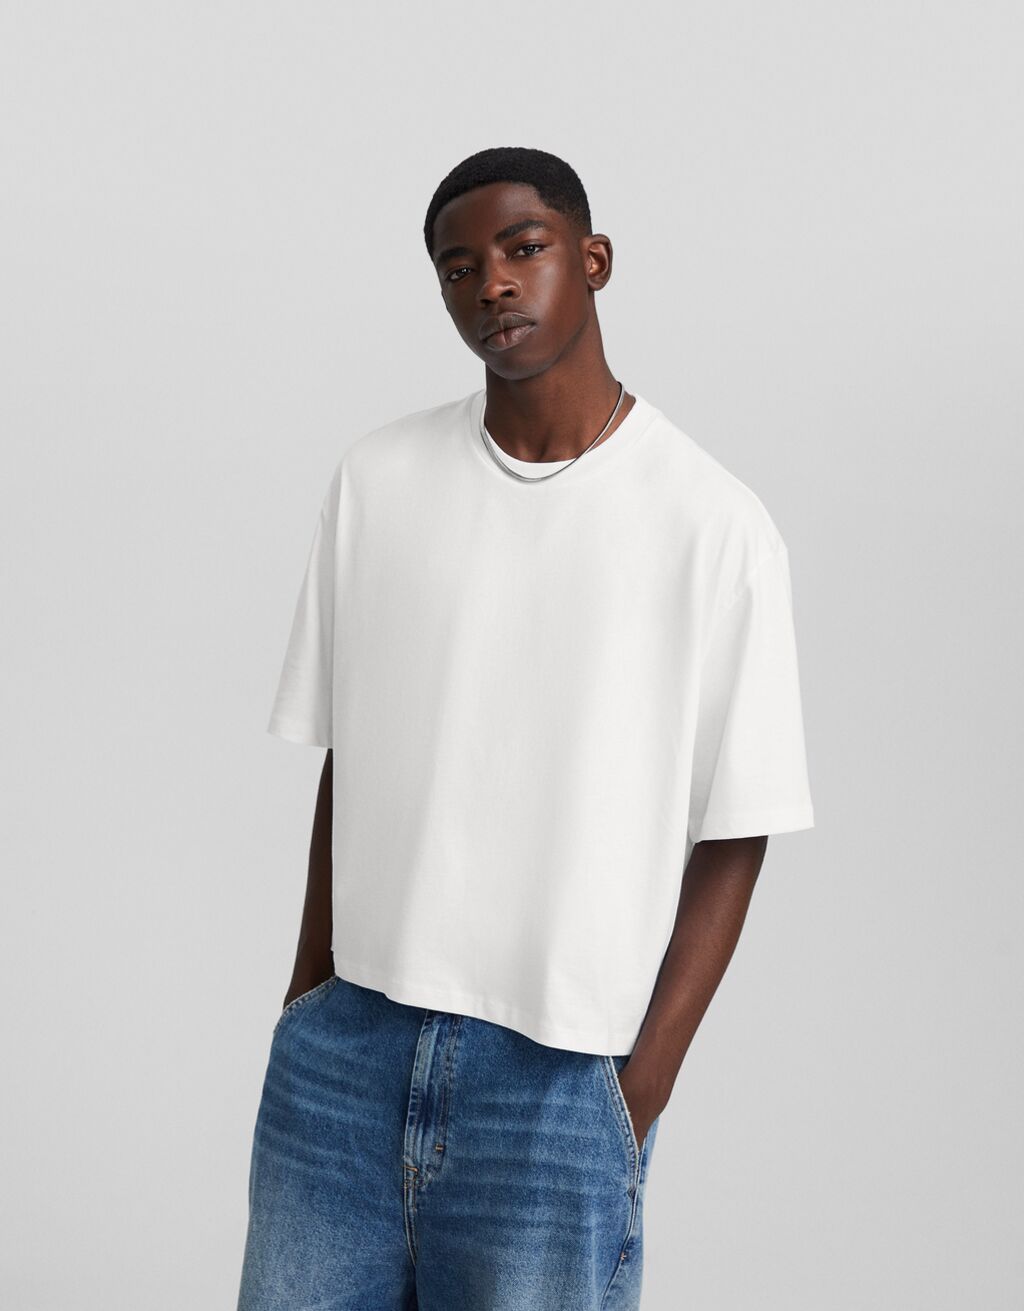 The Boxy Short Sleeve Cropped Shirt – The Shirt